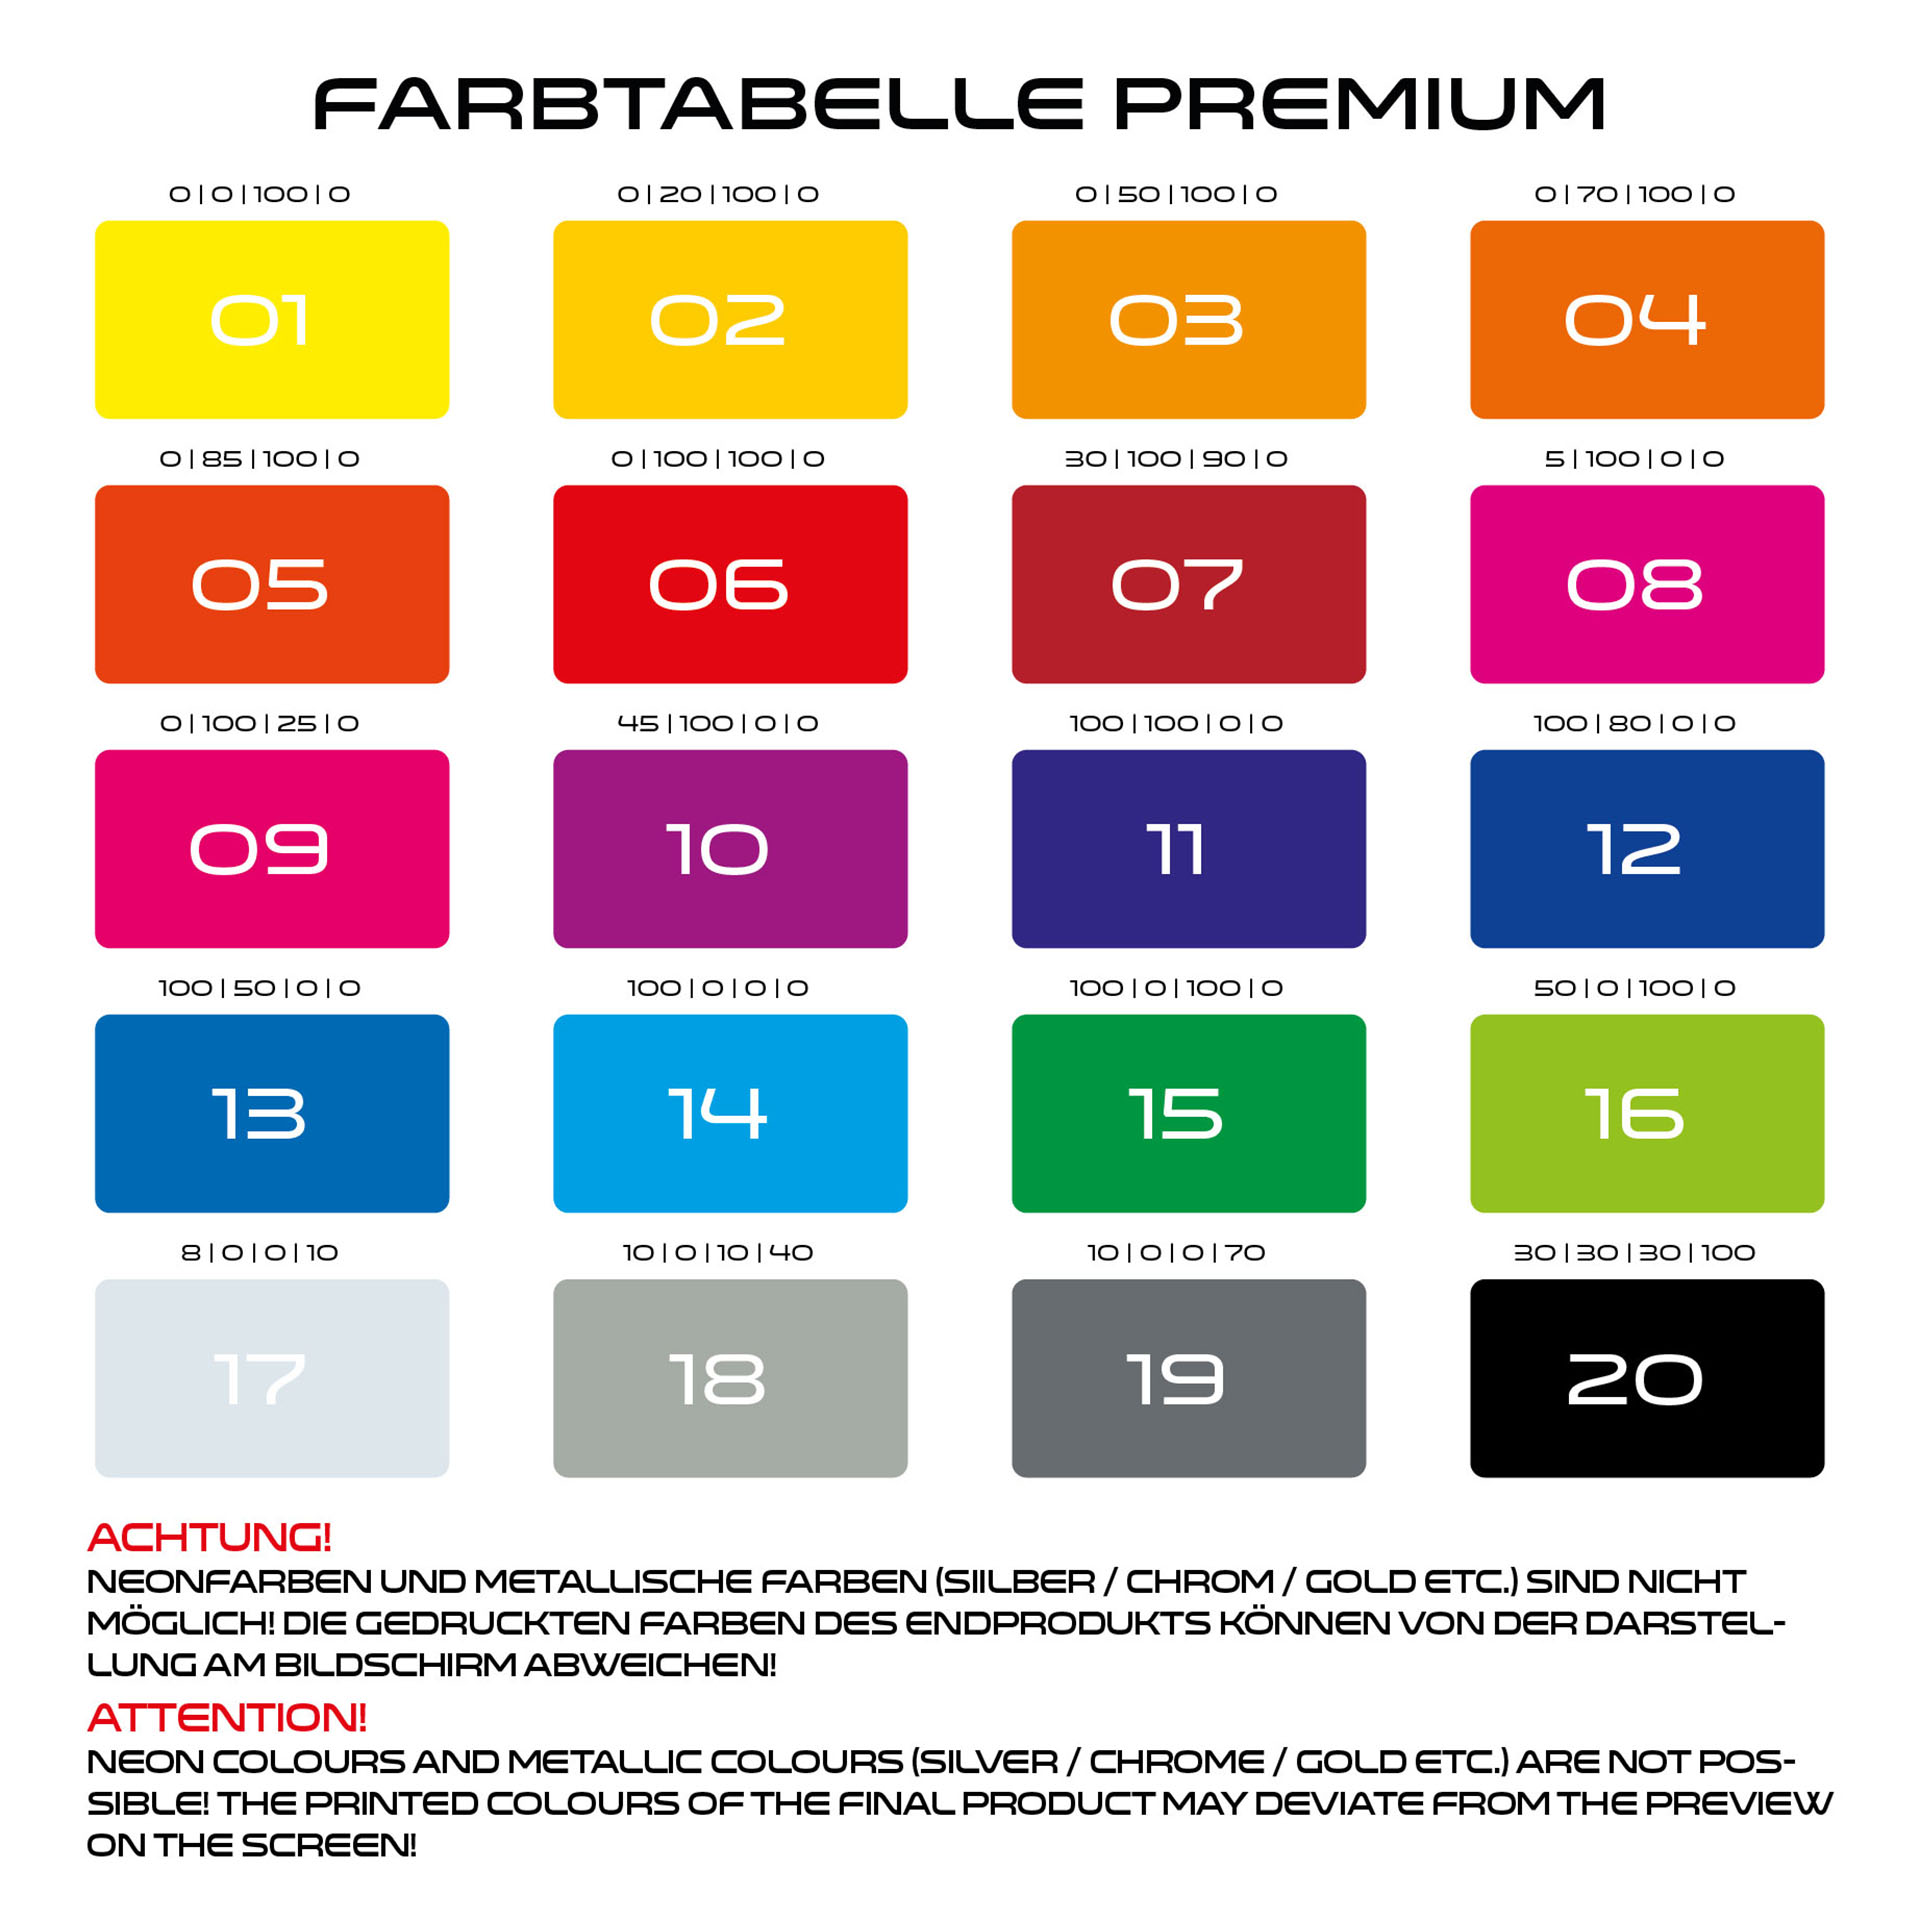 Cafe Racer Felgenaufkleber Premium Design Razor W Farbtabelle Premium Wheelsticker